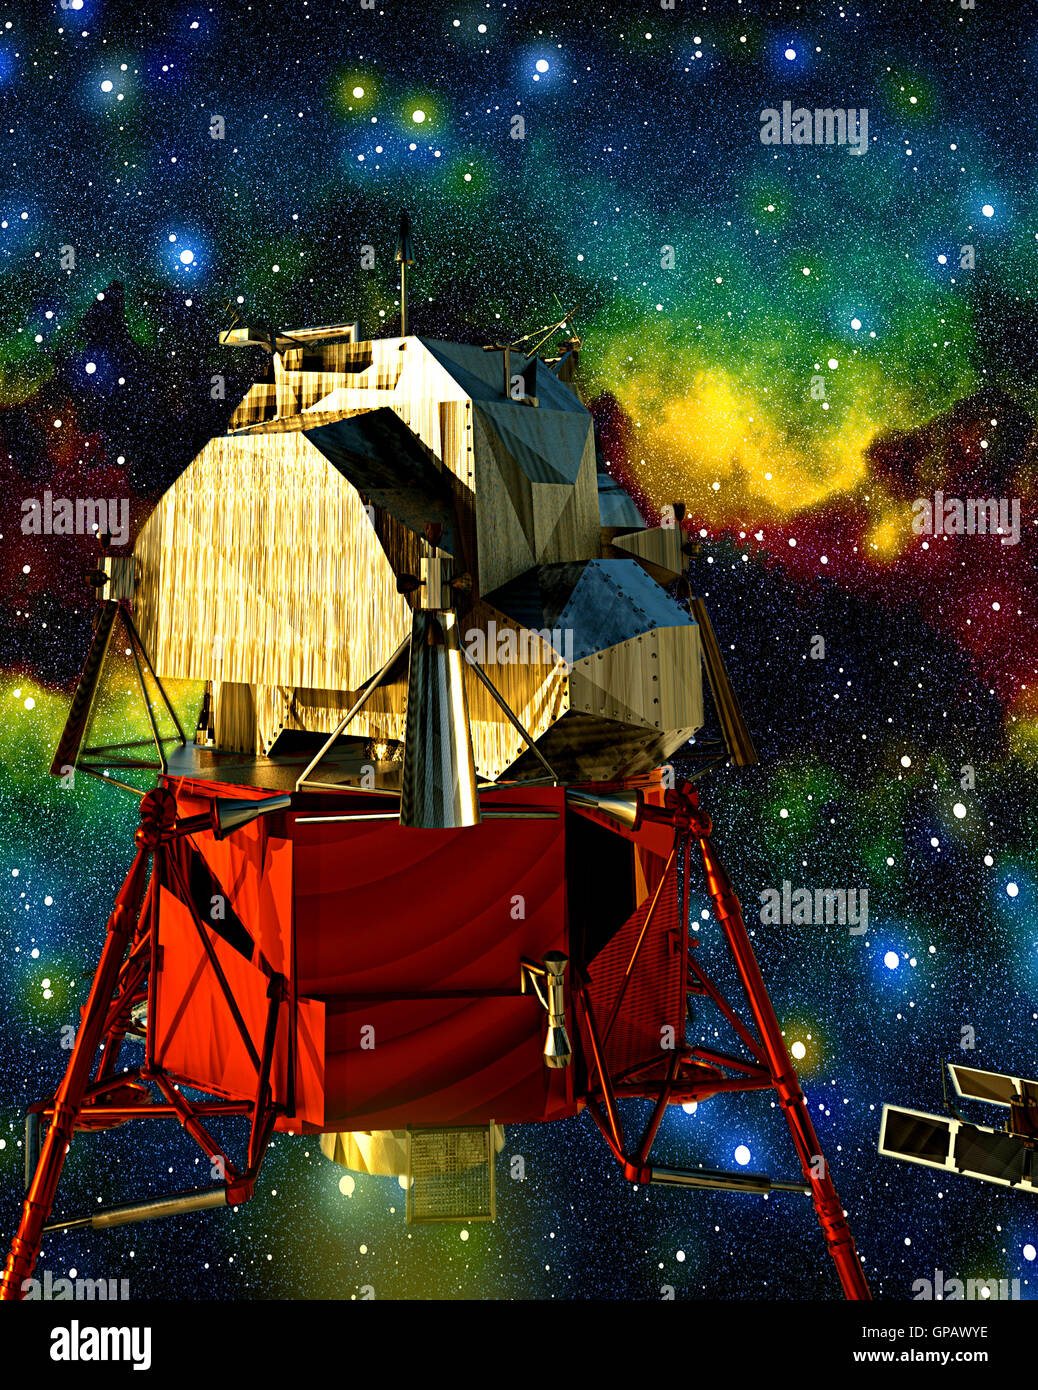 Satellite in space Stock Photo